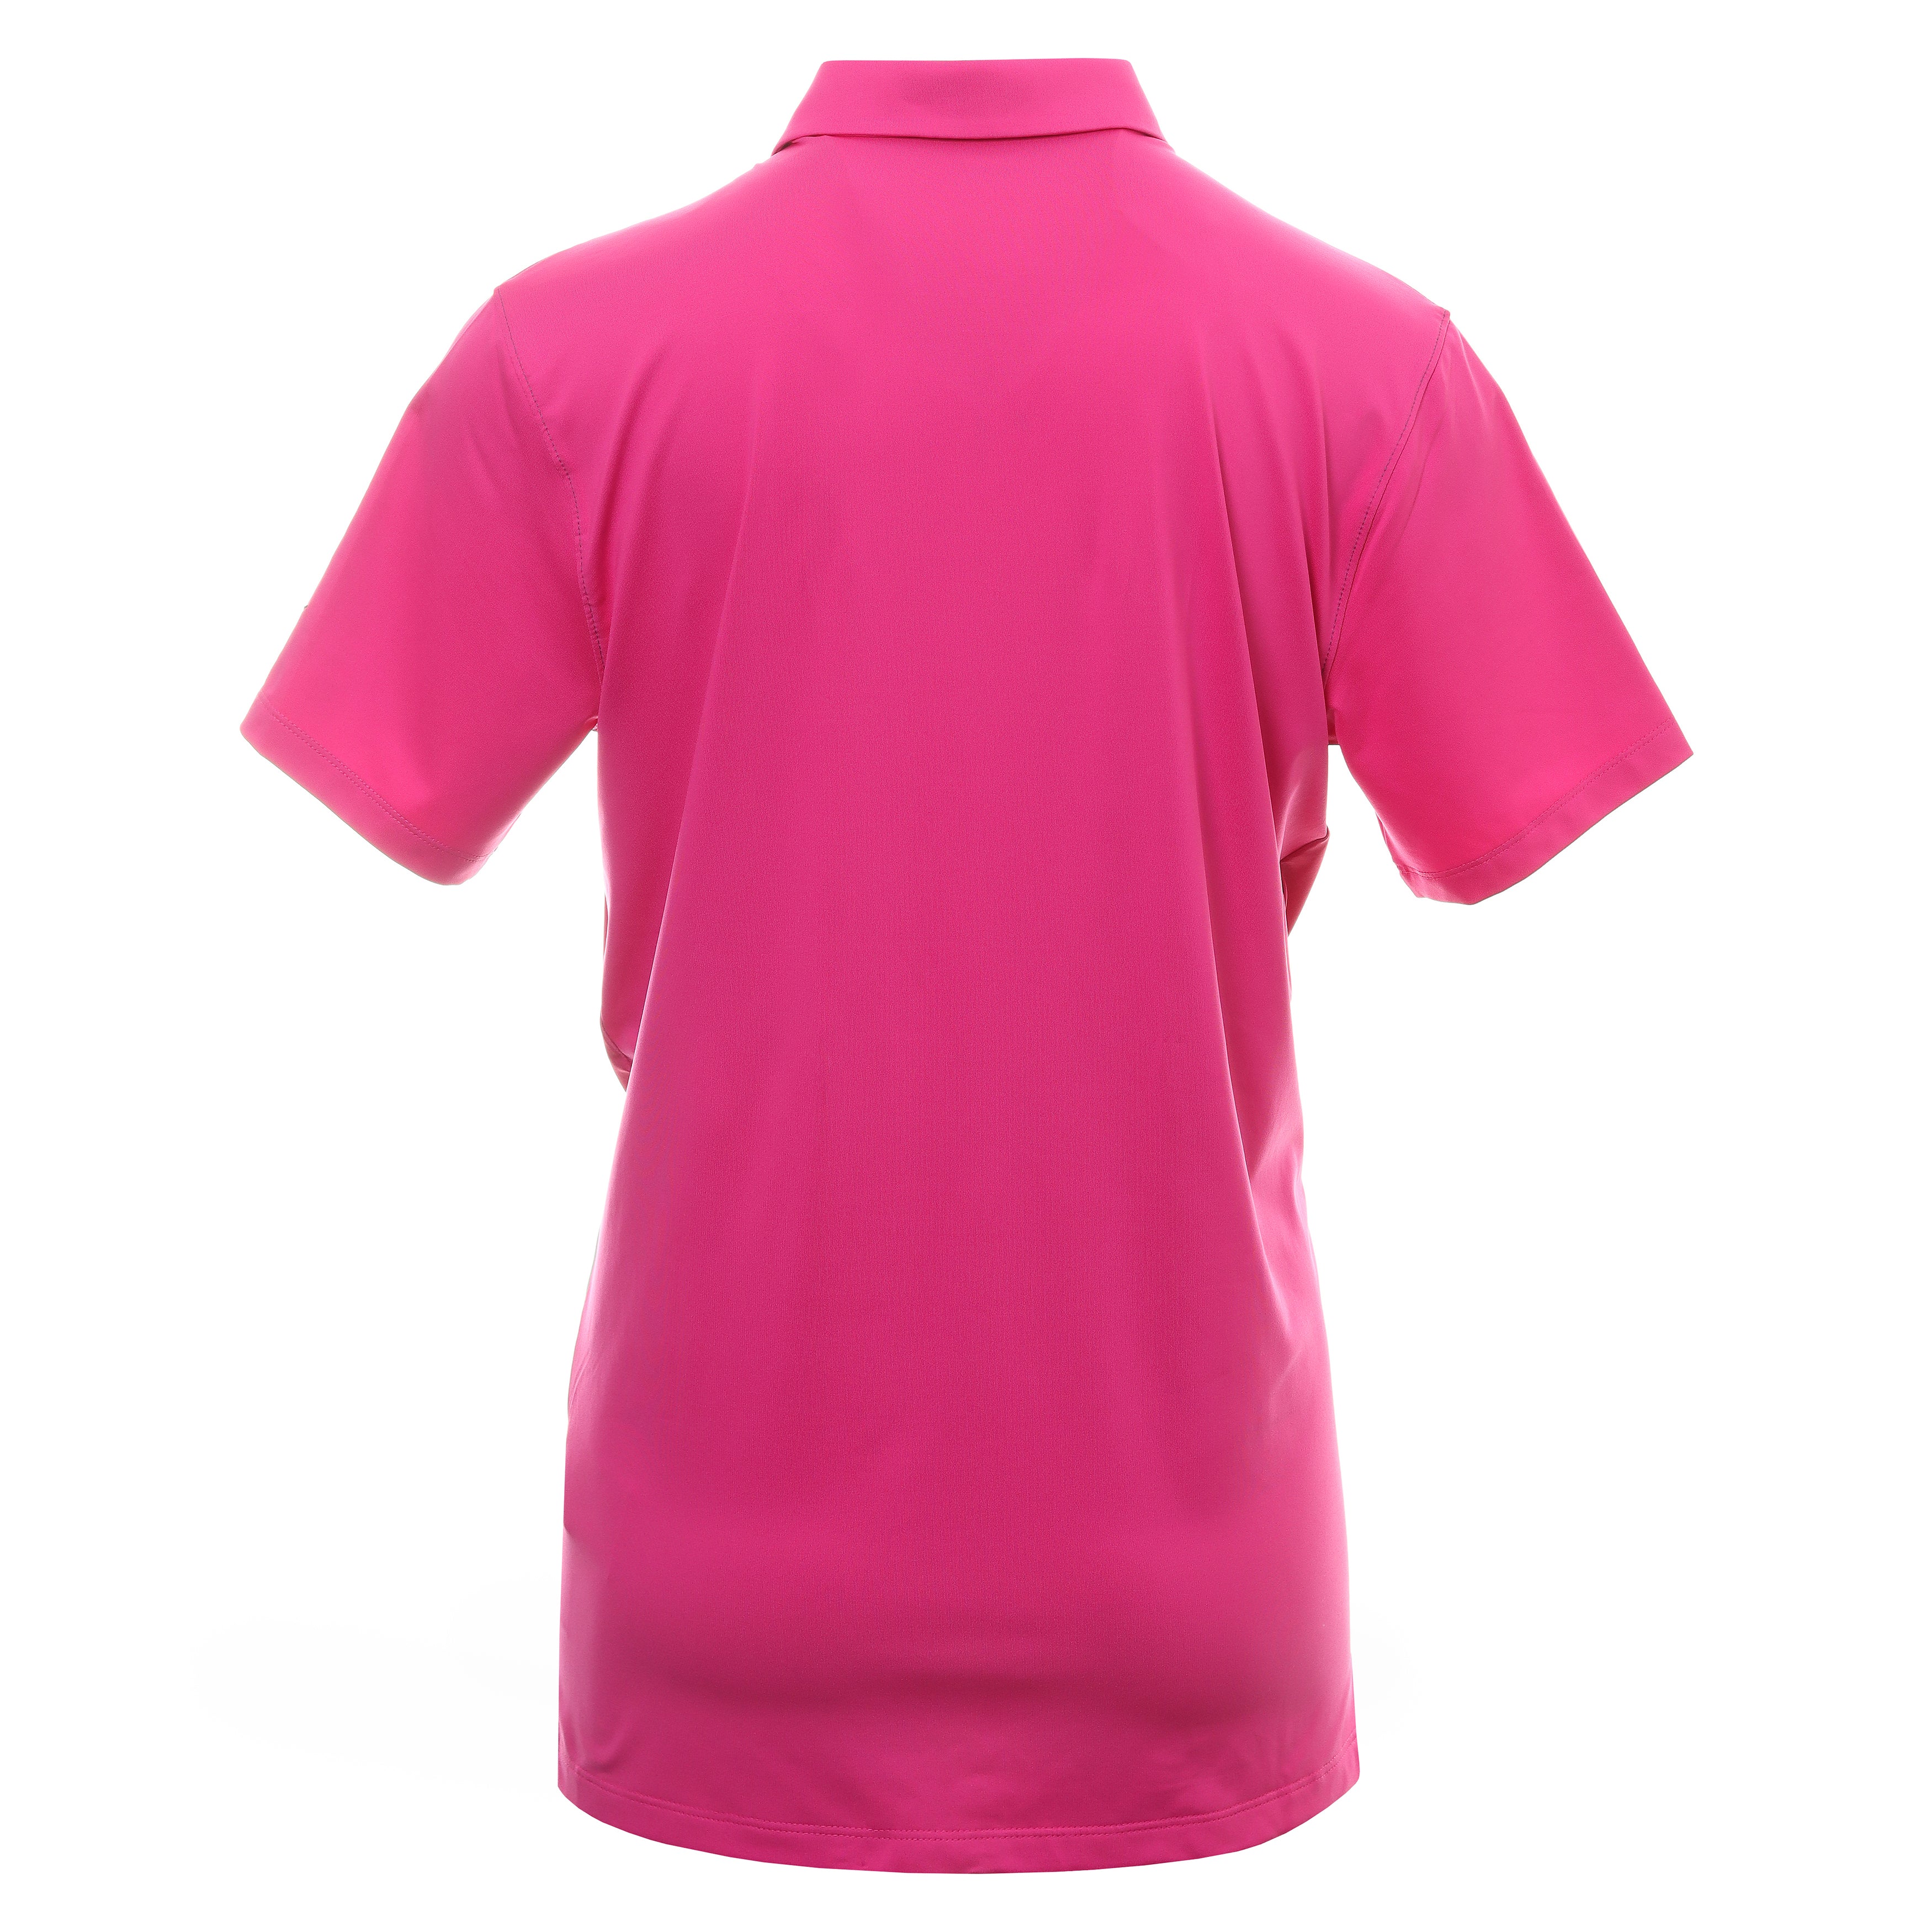 Nike Golf Dry Vapor Argyle Shirt DH0609 Active Pink 621 | Function18 ...